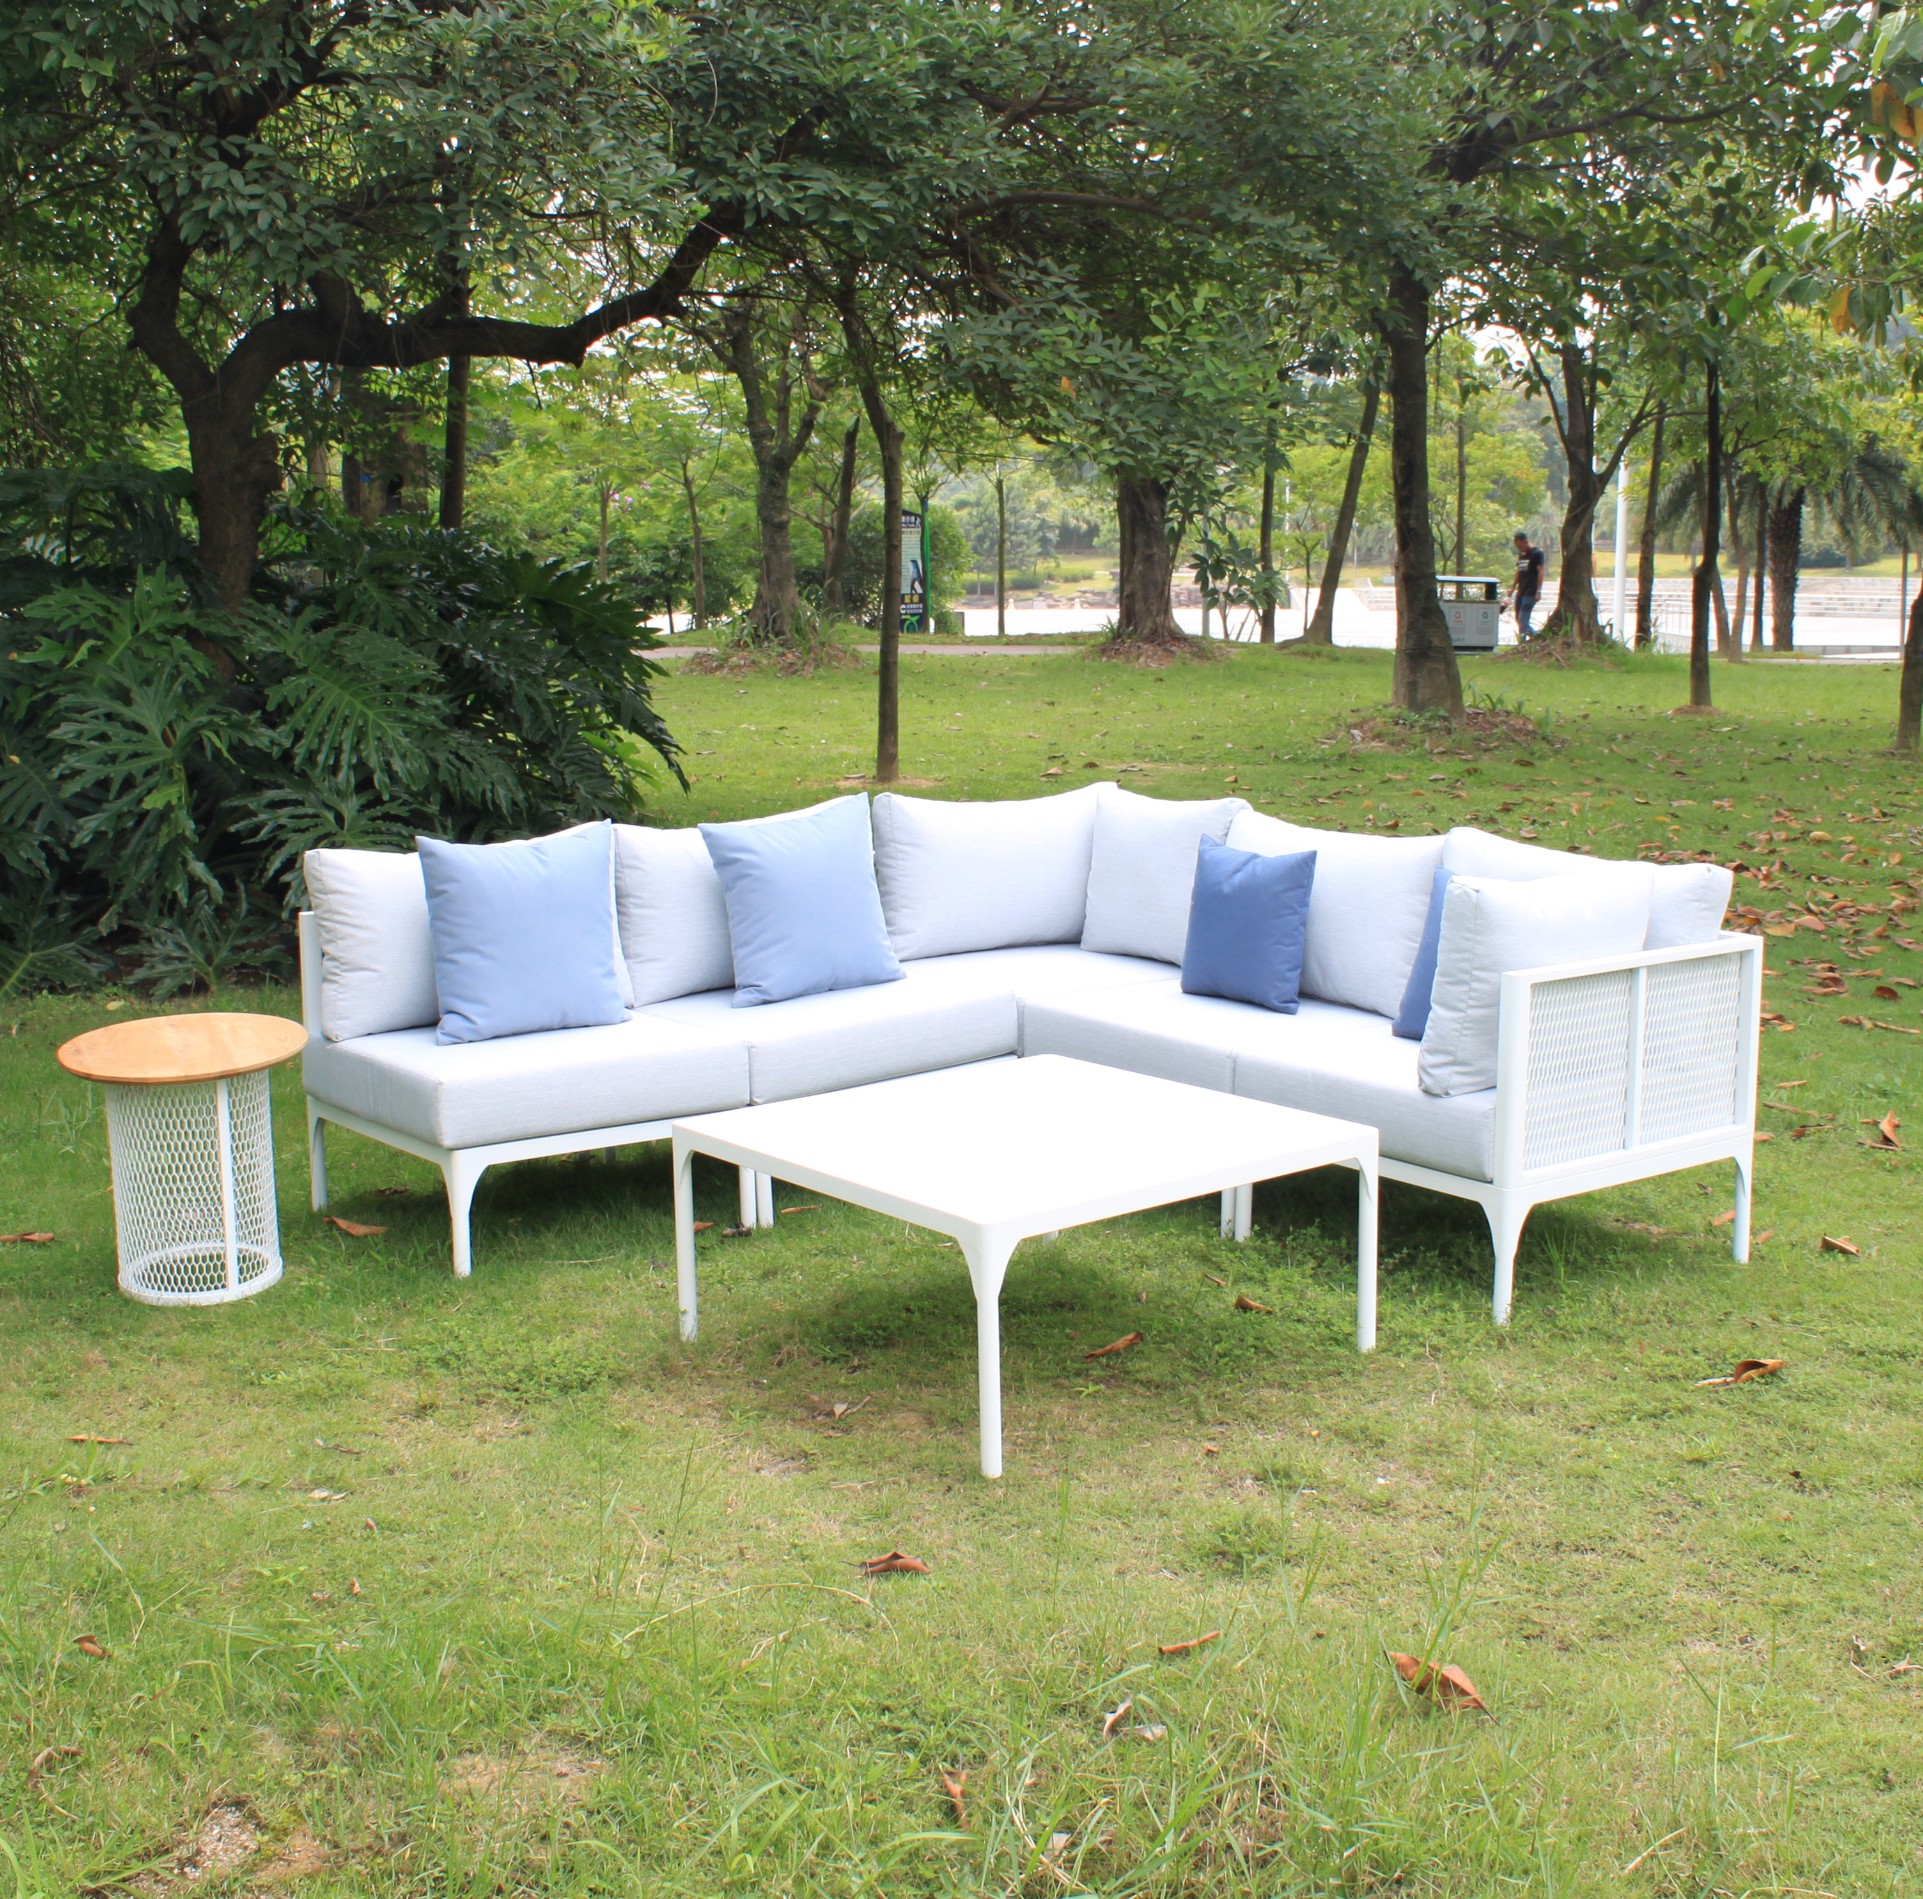 aluminium garden sofa outdoor furniture Manufacturers, aluminium garden sofa outdoor furniture Factory, Supply aluminium garden sofa outdoor furniture